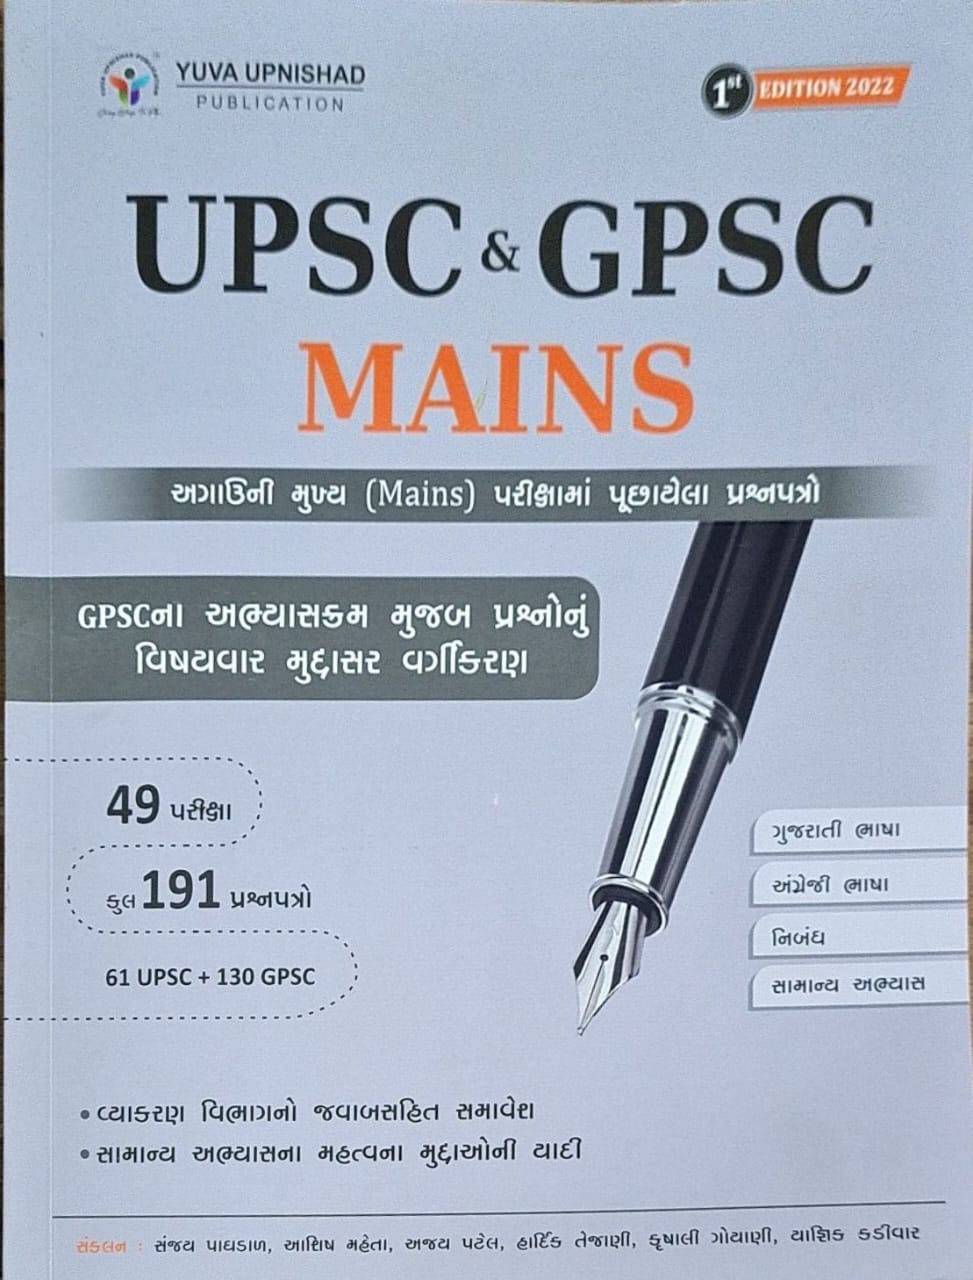 Upsc&gpsc Mains